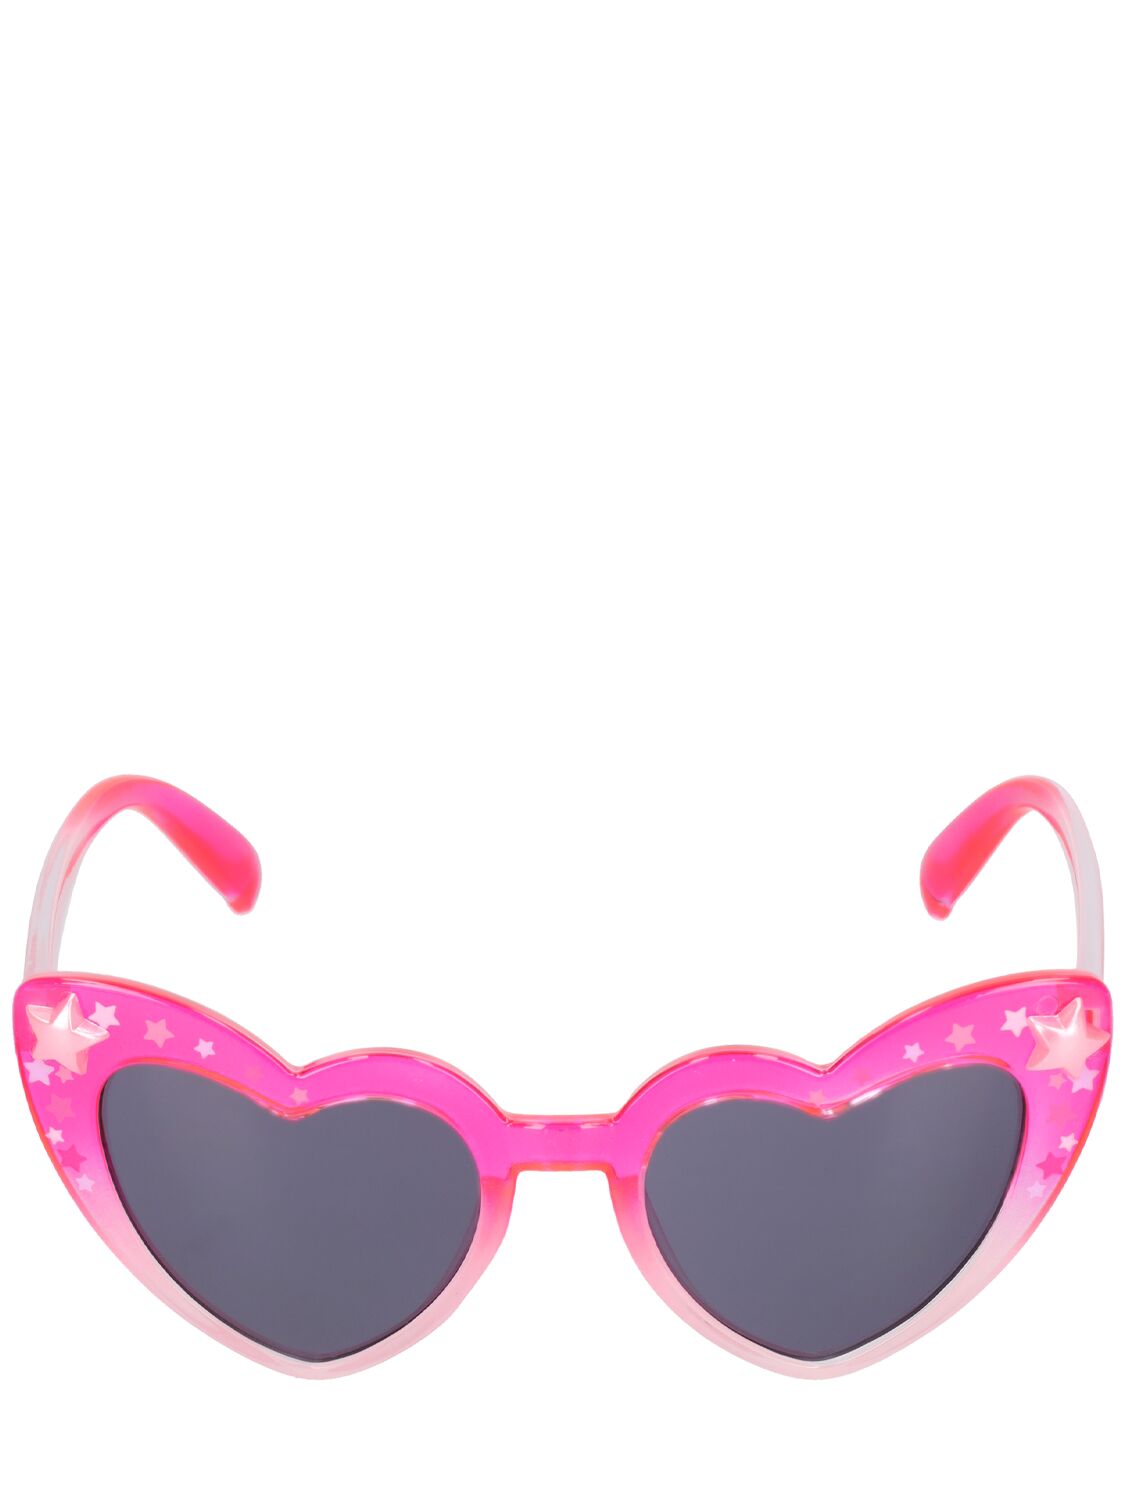 Image of Heart Sunglasses